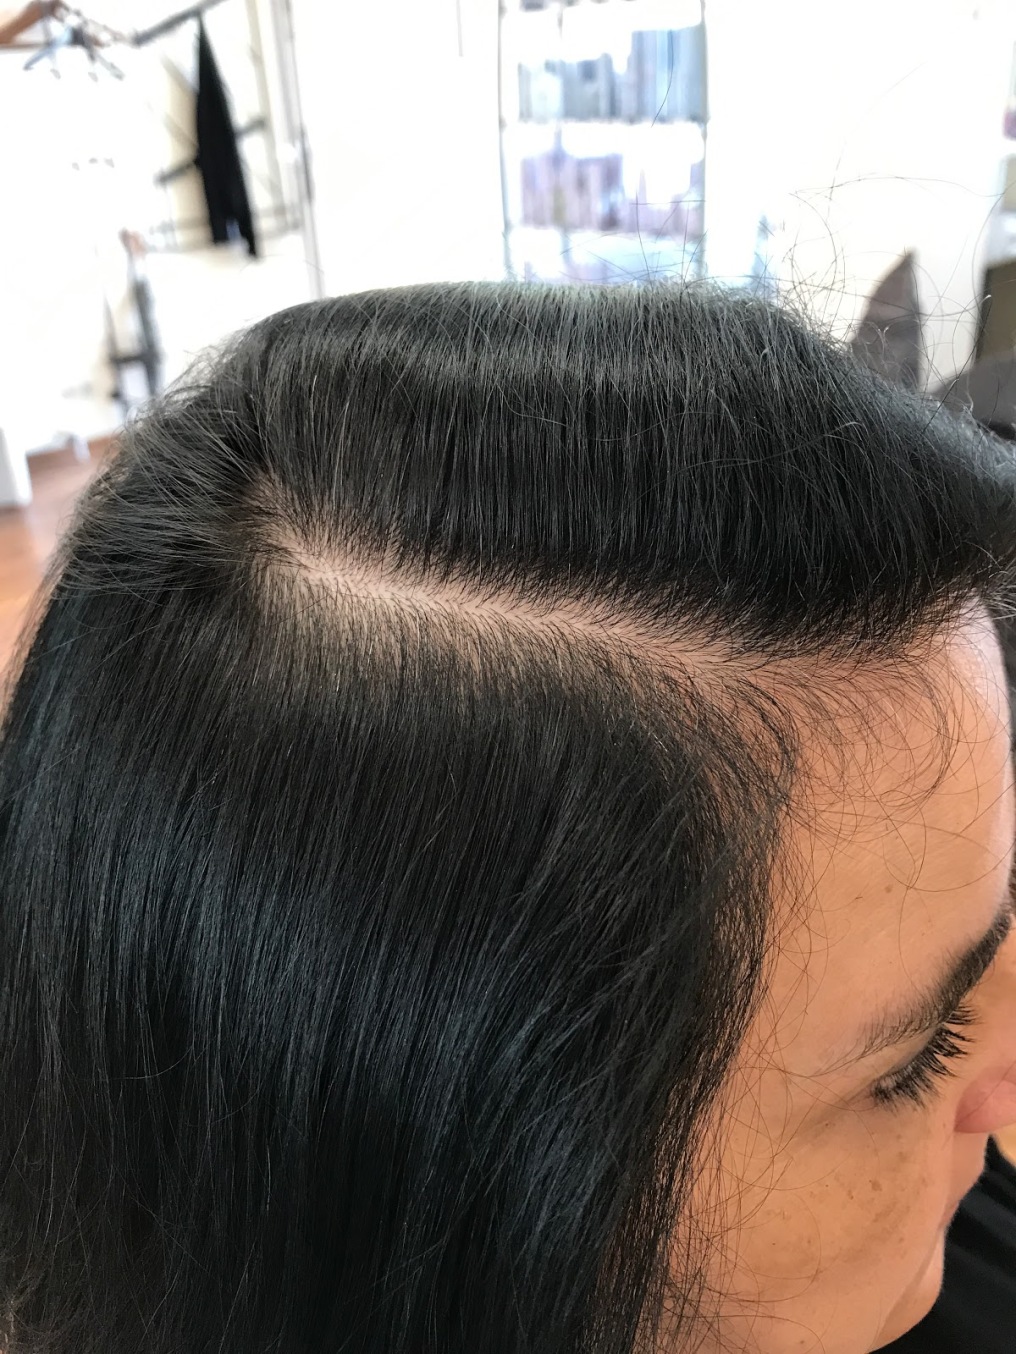 Sperwahtasou: graue haare rauswachsen lassen strähnchen